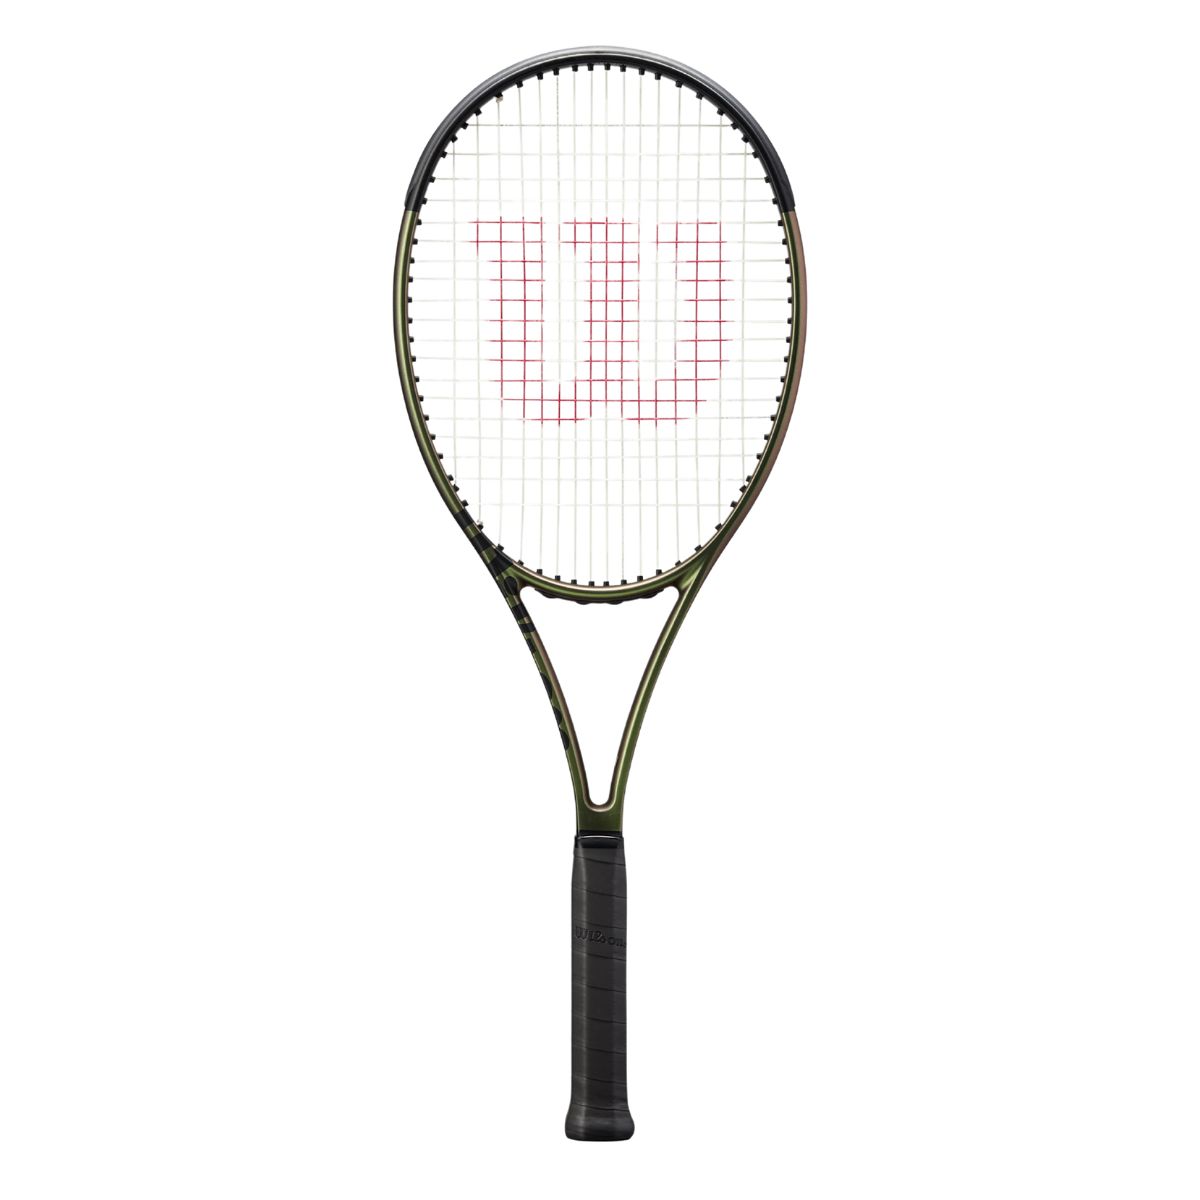 The Best Wilson Tennis Rackets Options: Wilson Blade 98 V8